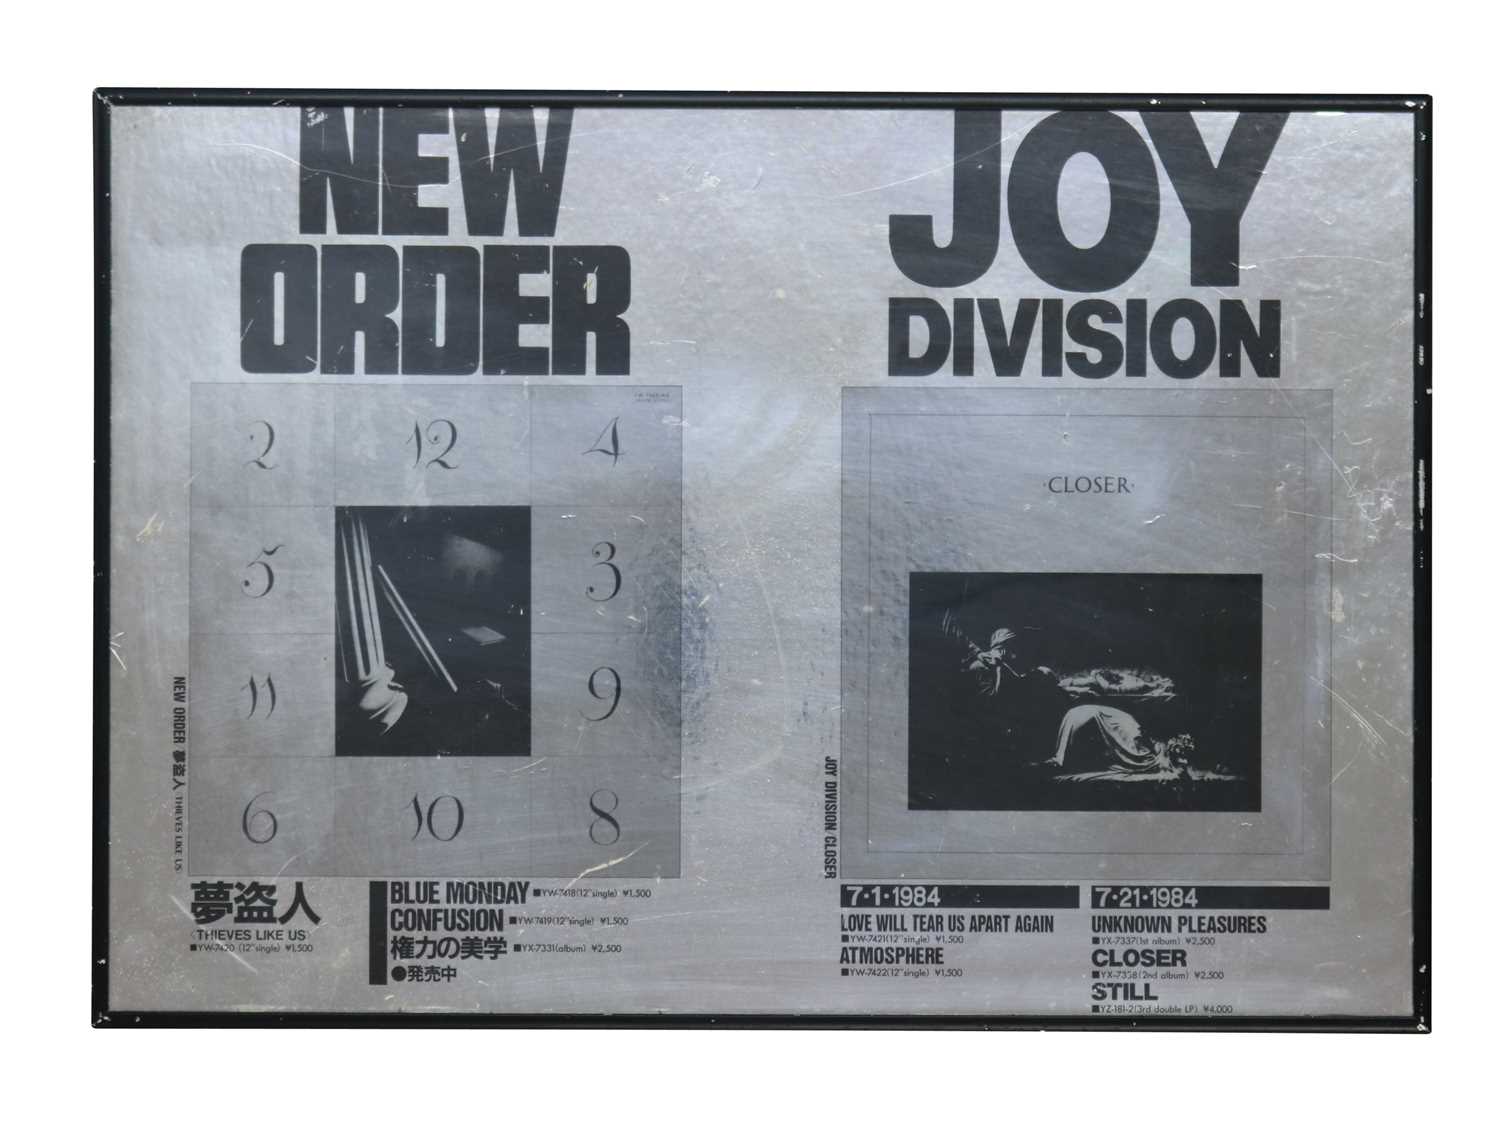 Lot 35 - NEW ORDER & JOY DIVISION 1984 JAPANESE PROMO POSTER